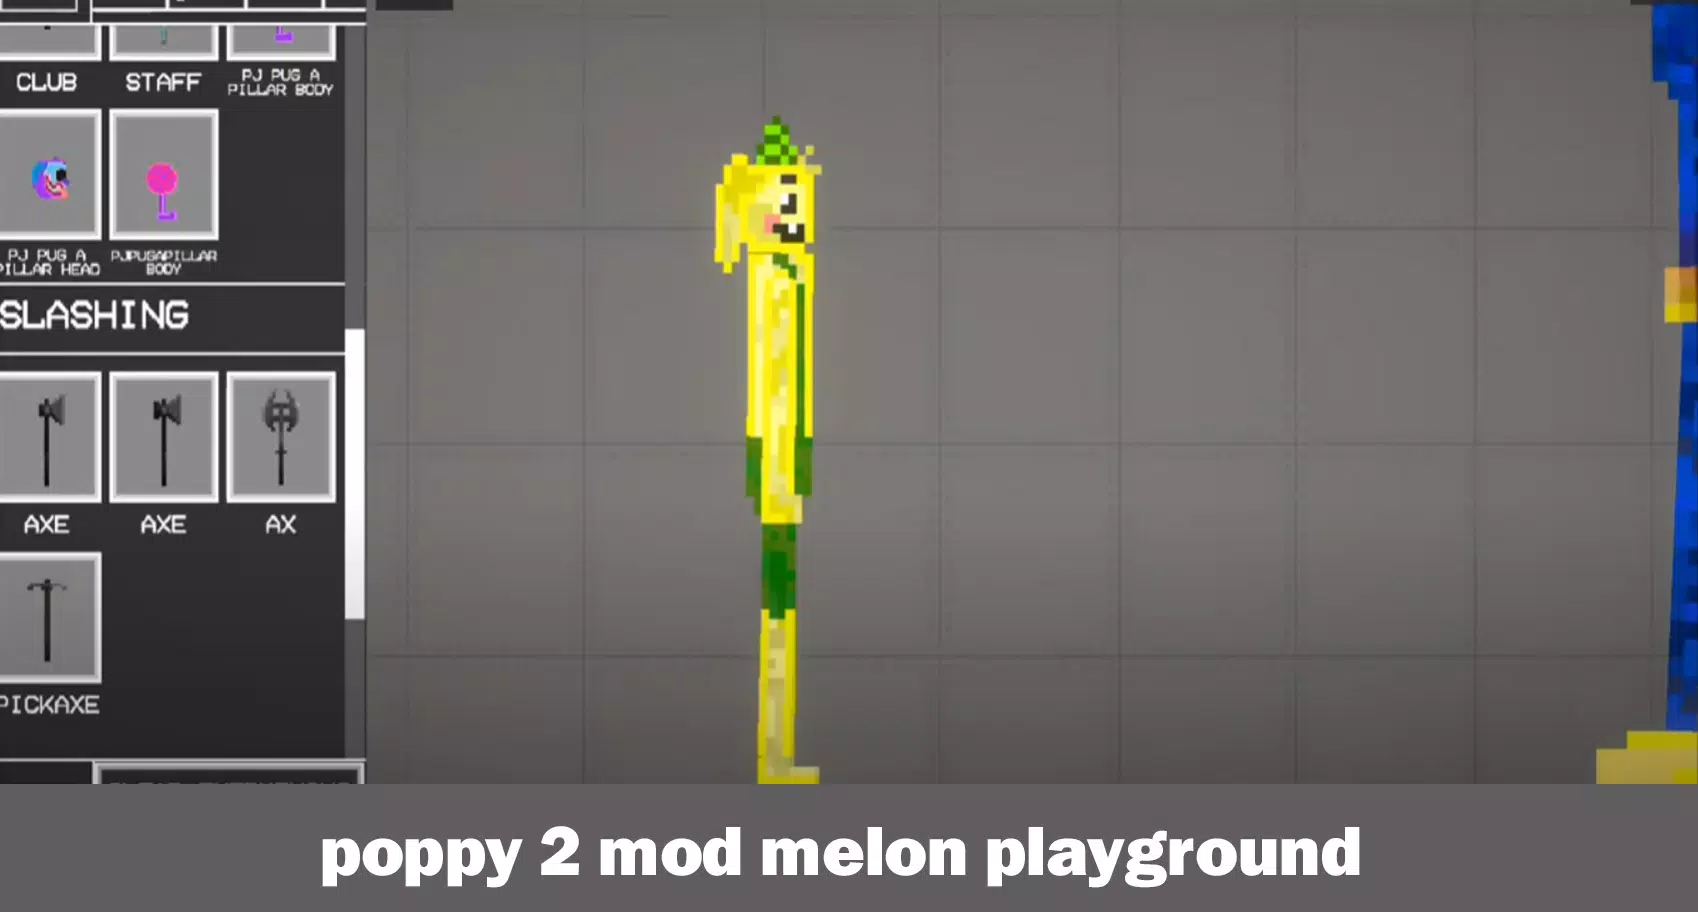 Мод на Поппи Плейтайм в Melon Playground 3 глава. Twenty Seven Melon Playground мод на попи плей тайм 3. Classic Sonic Melon Playground Mod. Попи Плейтайм Мелон плейграунд.